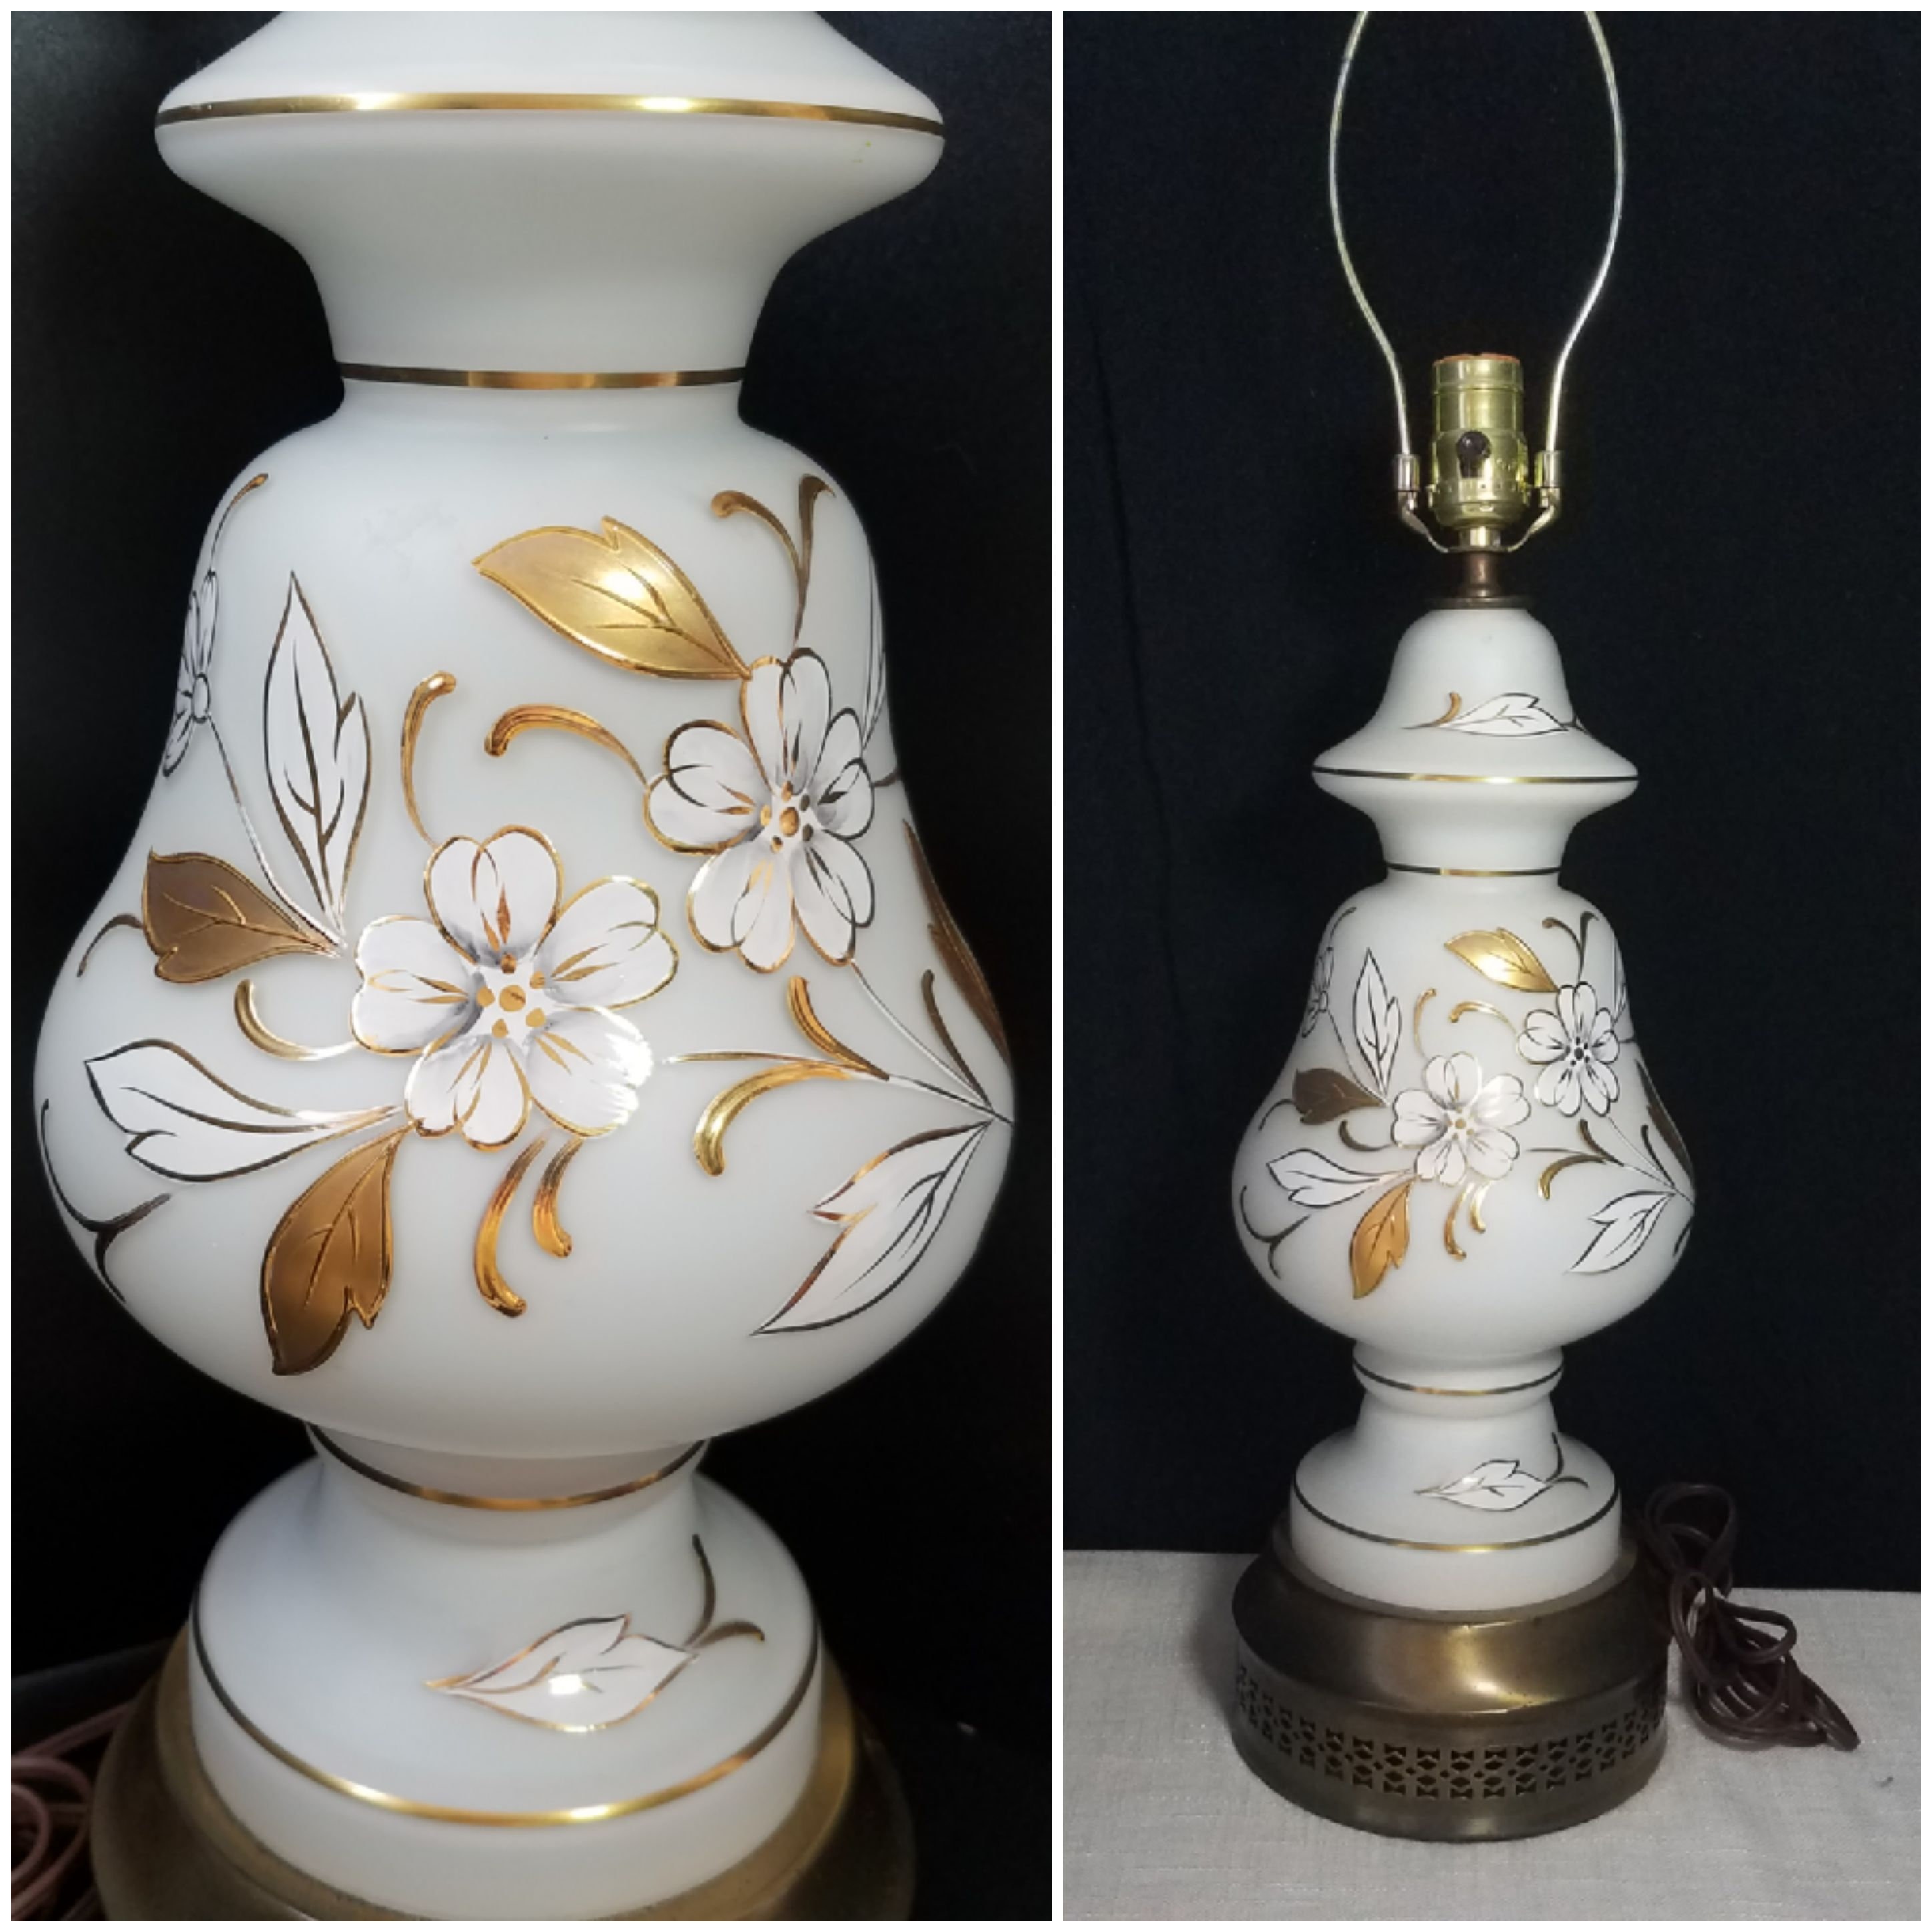 Gold / Silver Porcelain Paint - Golden Paint without firing for Ceramics,  Glass